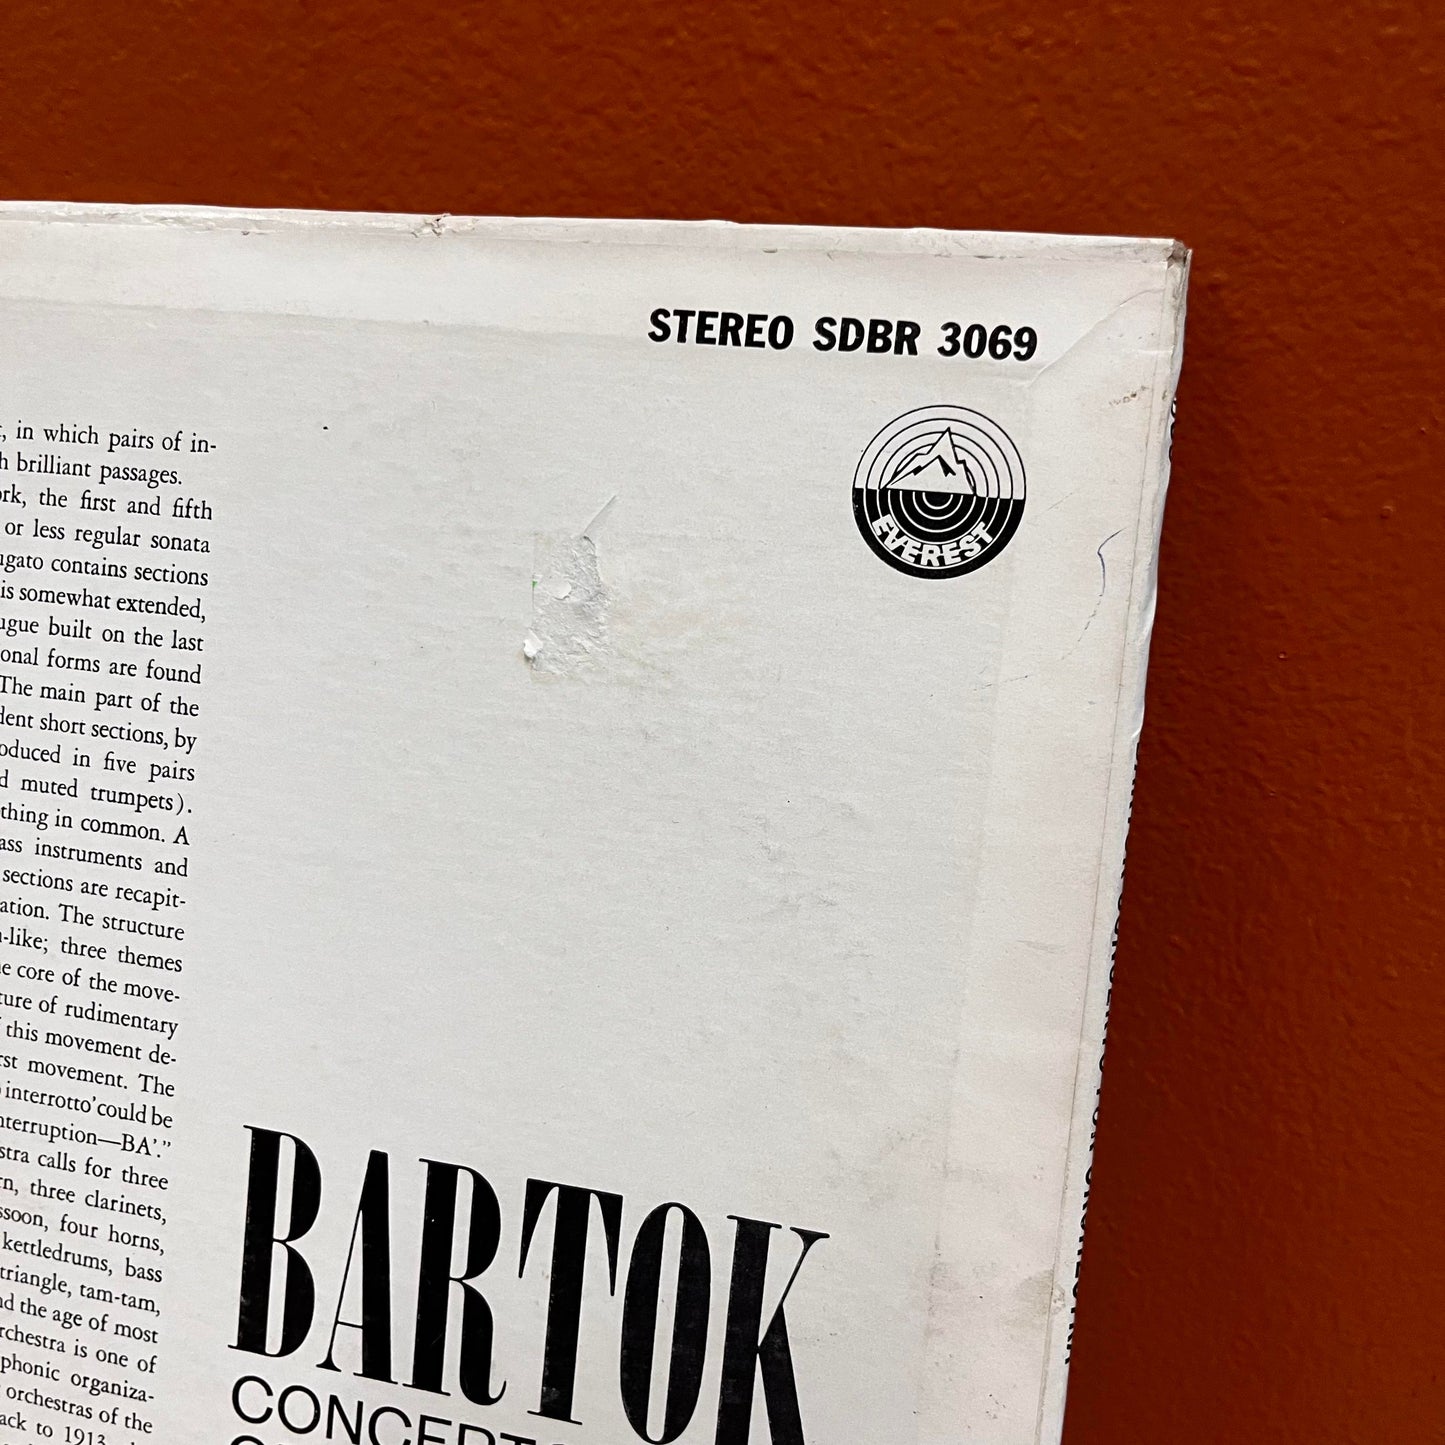 Bartok/Stokowski Concerto for Orchestra - Everest SDBR 3069 Used Viny